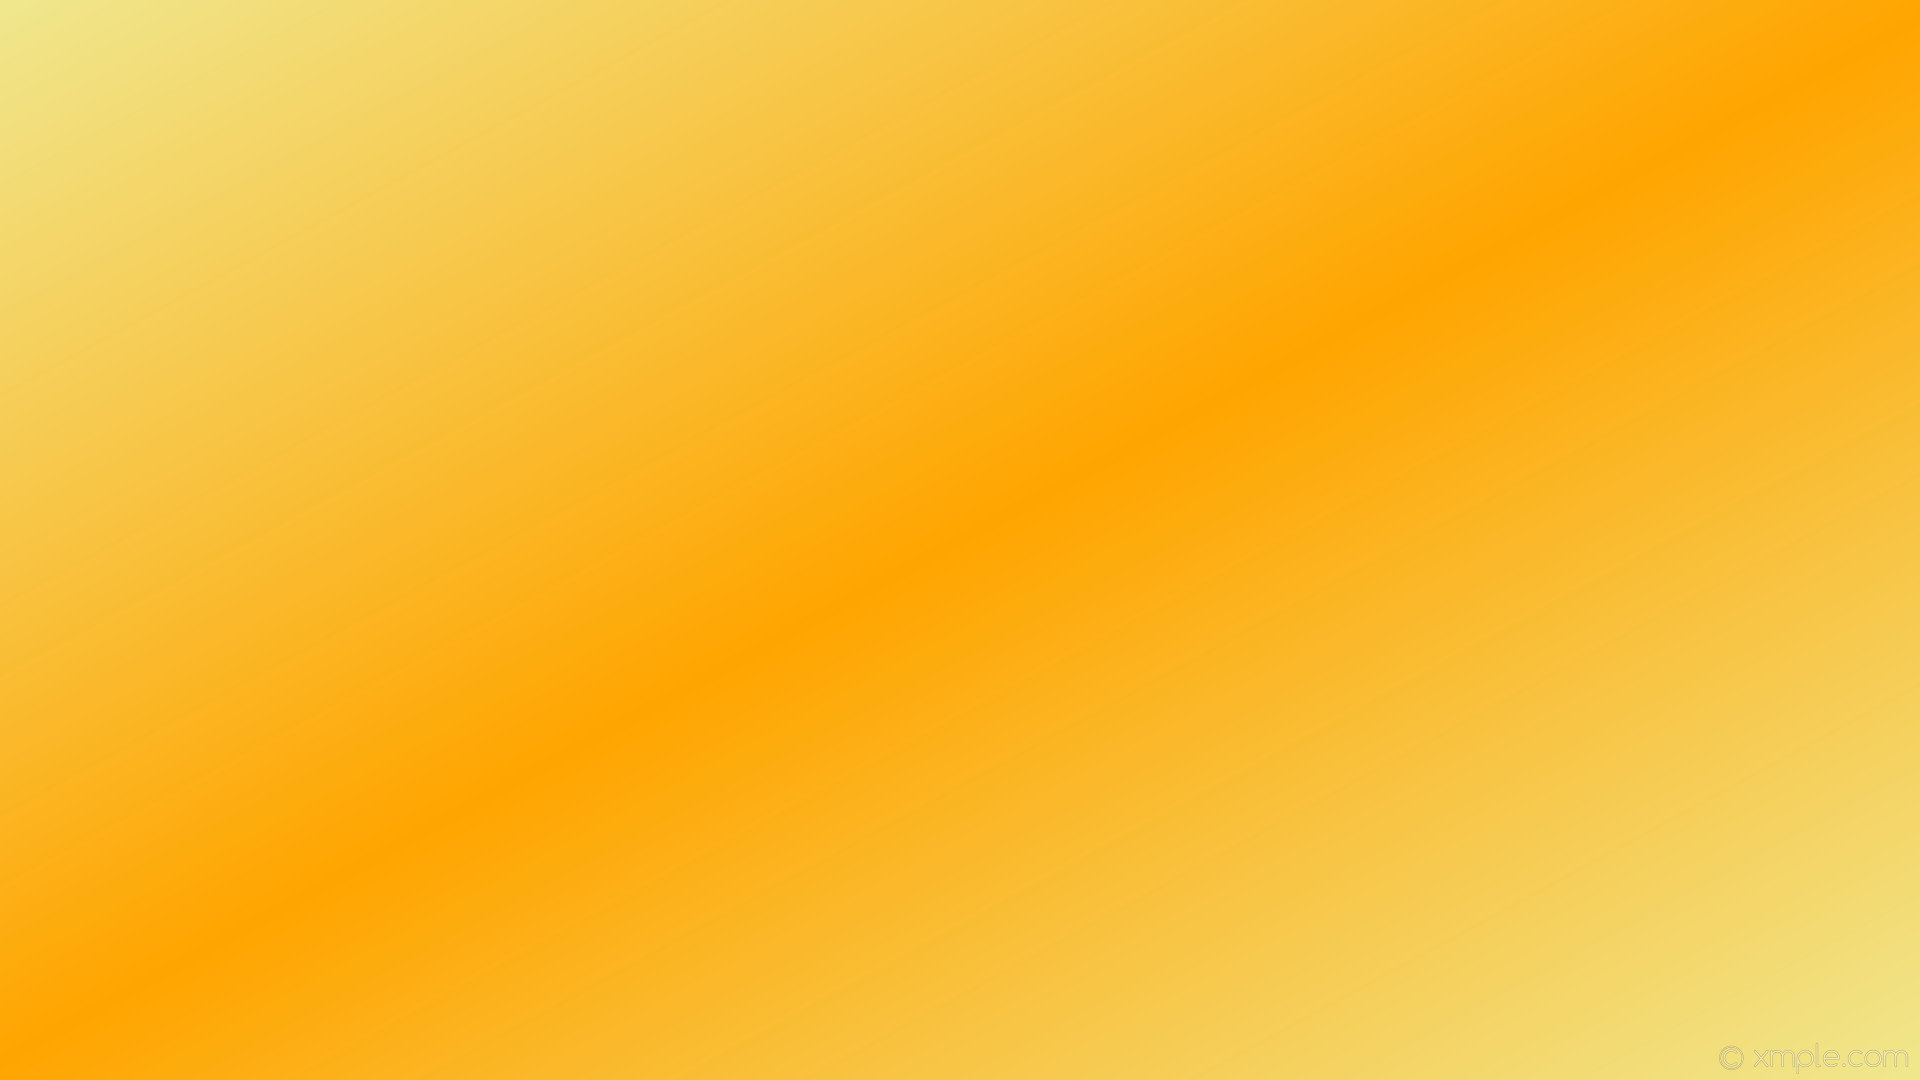 1920x1080 wallpaper orange gradient highlight linear yellow khaki #f0e68c #ffa500  330Â° 50%